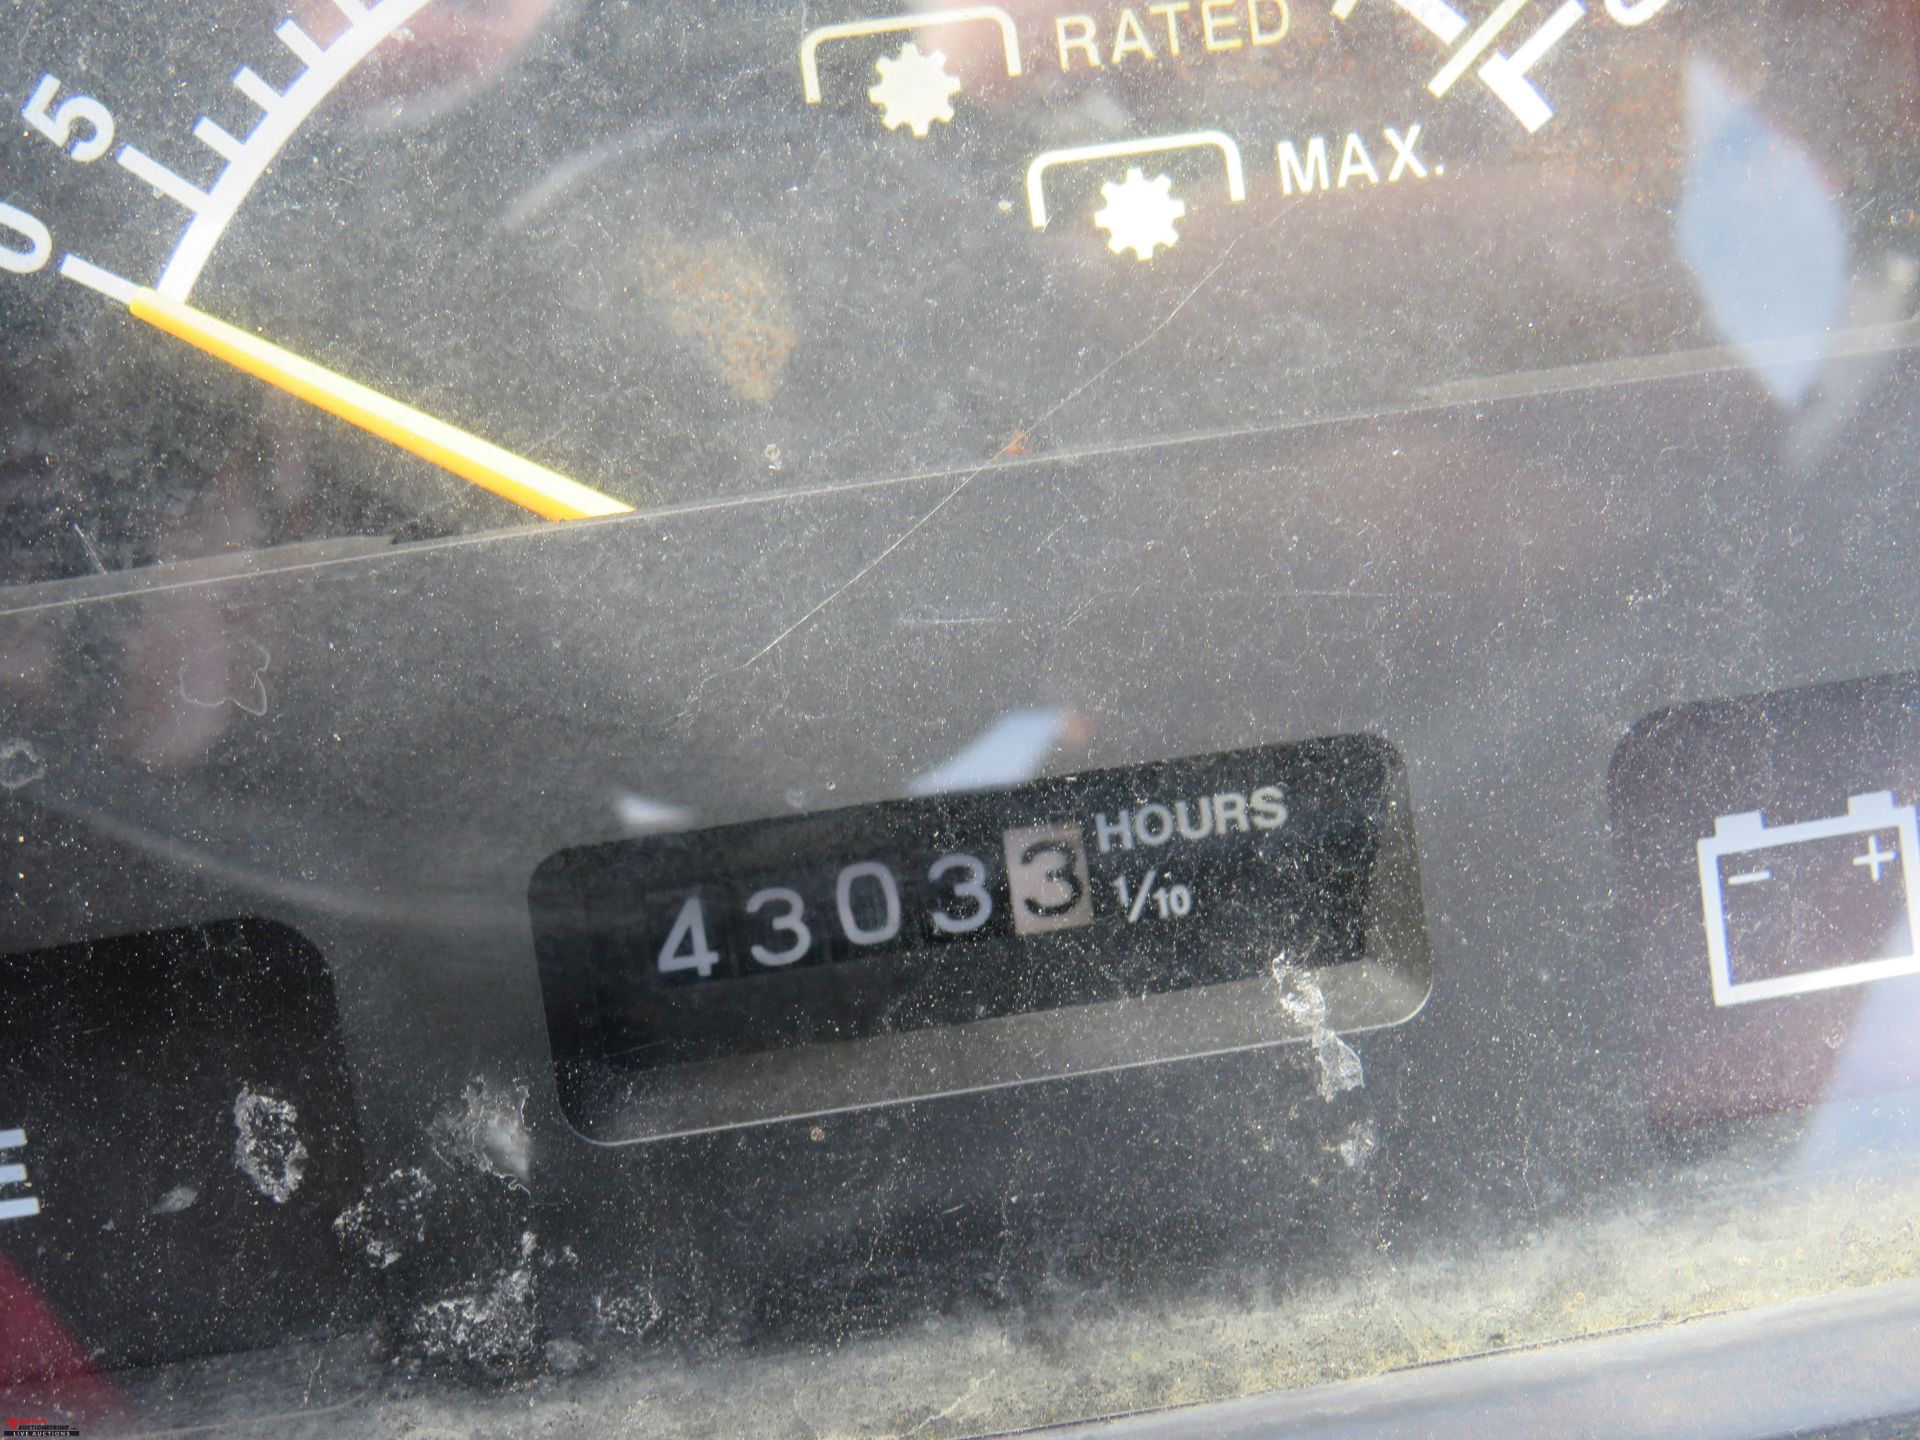 2002 JOHN DEERE 790 TRACTOR, 3PT, NO TOP LINK, HAS PTO, 4 WHEEL DRIVE, 11.2-24 REAR TIRES, 4303 - Image 9 of 9